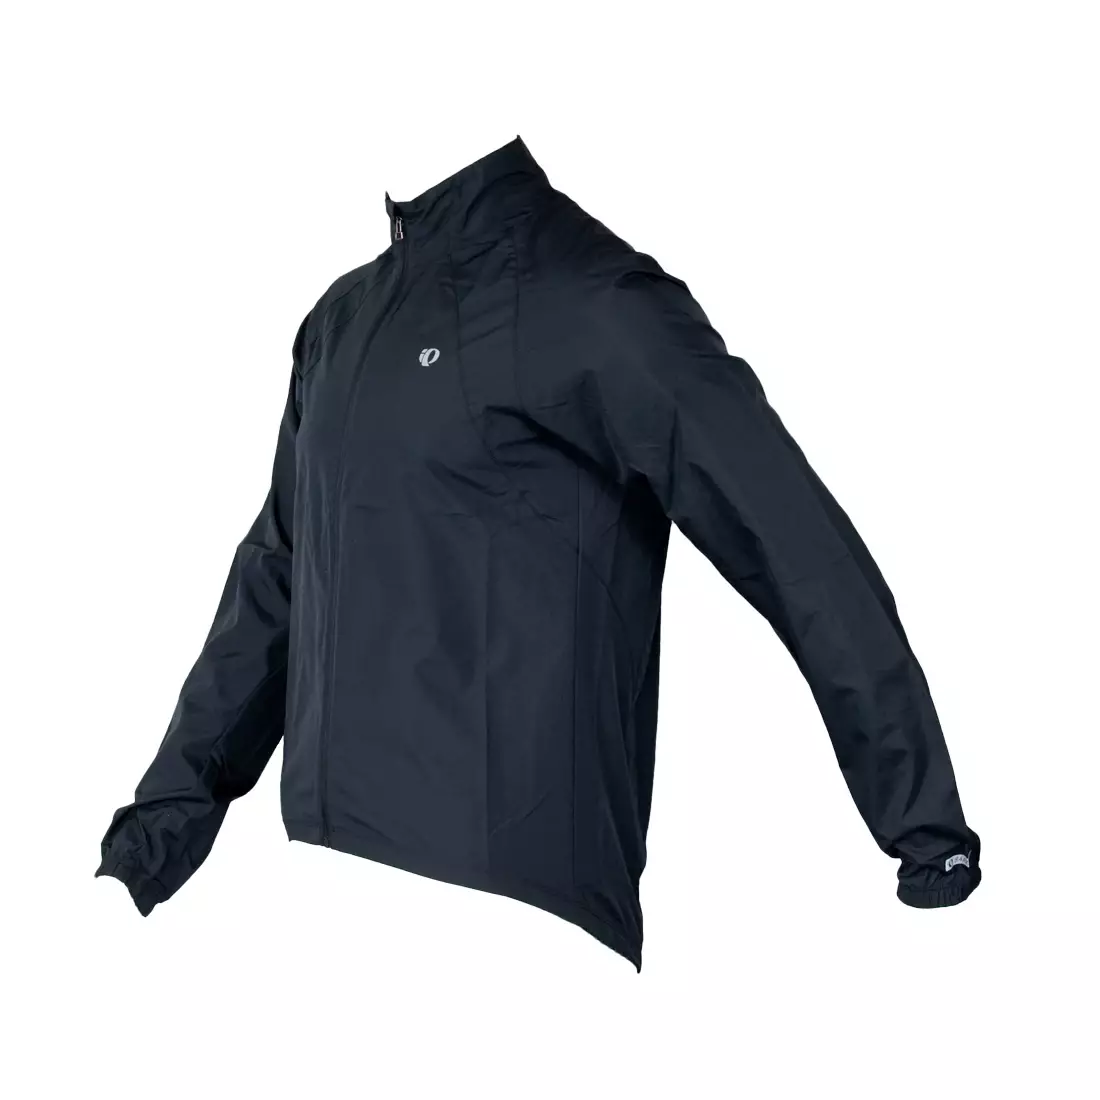 PEARL IZUMI - SELECT Barrier Jacket 11131335-021 - men's cycling jacket - color: Black